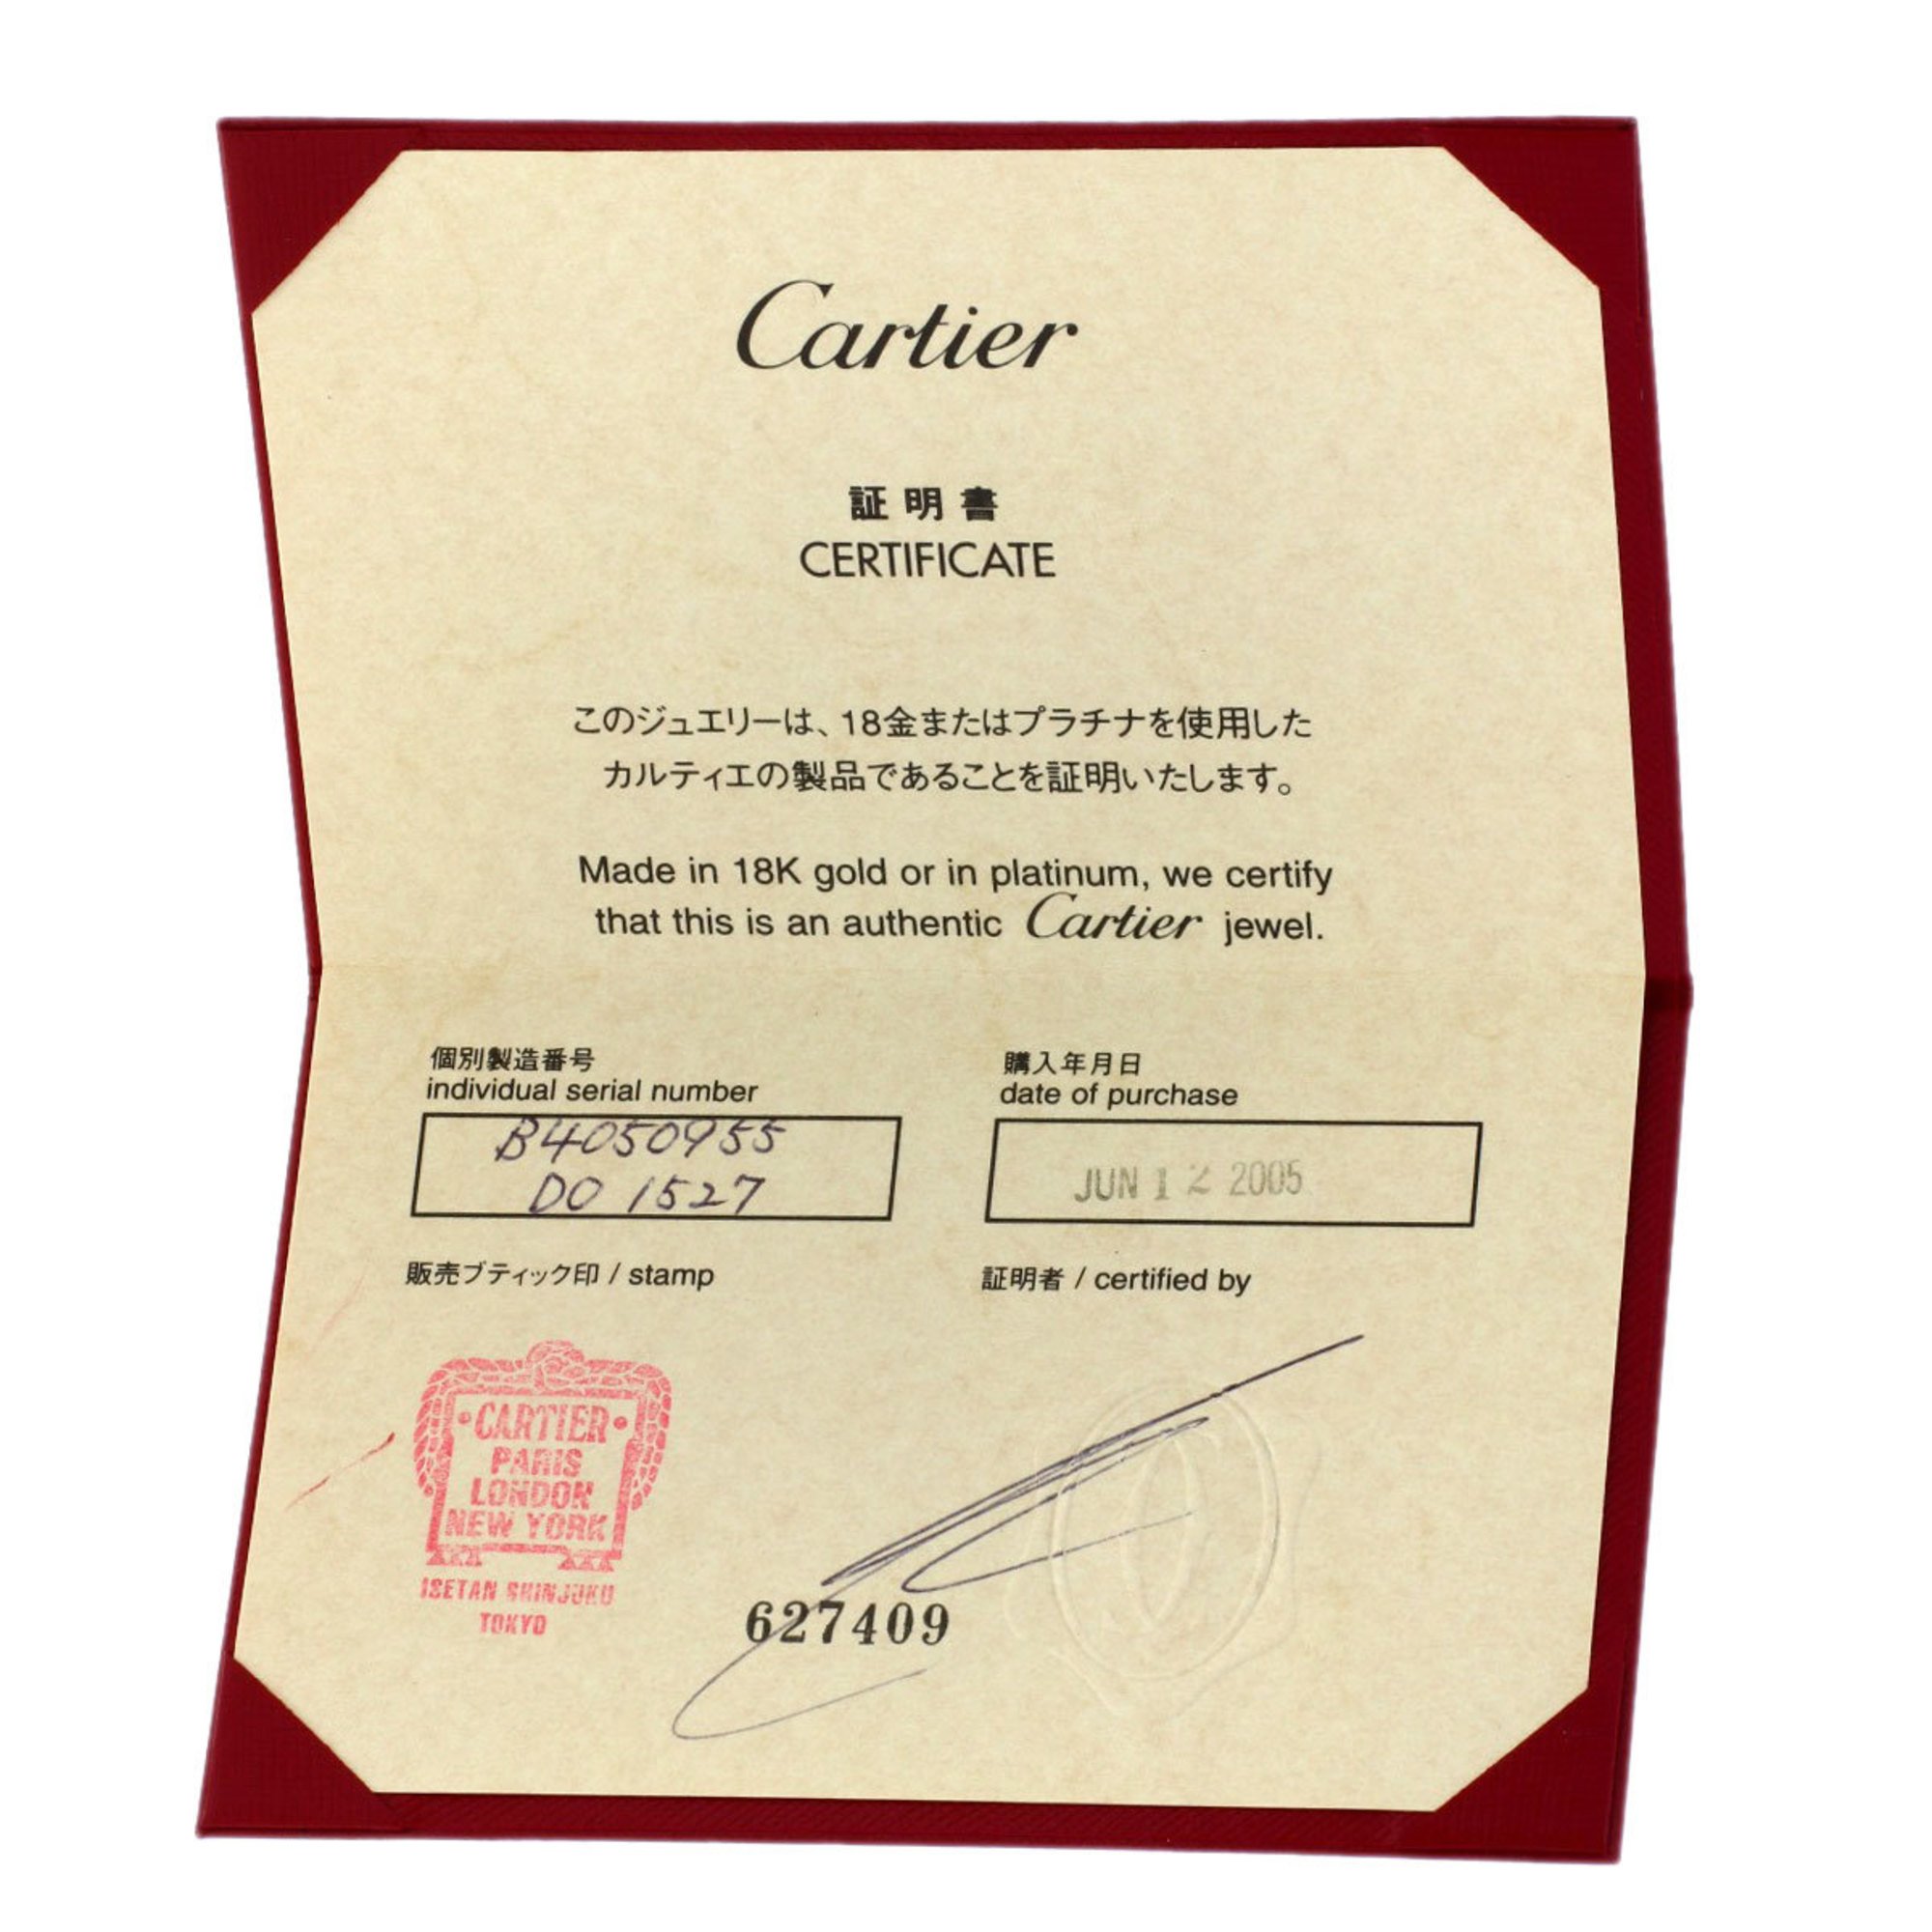 Cartier Happy Birthday #55 Ring, 18K White Gold, Women's, CARTIER